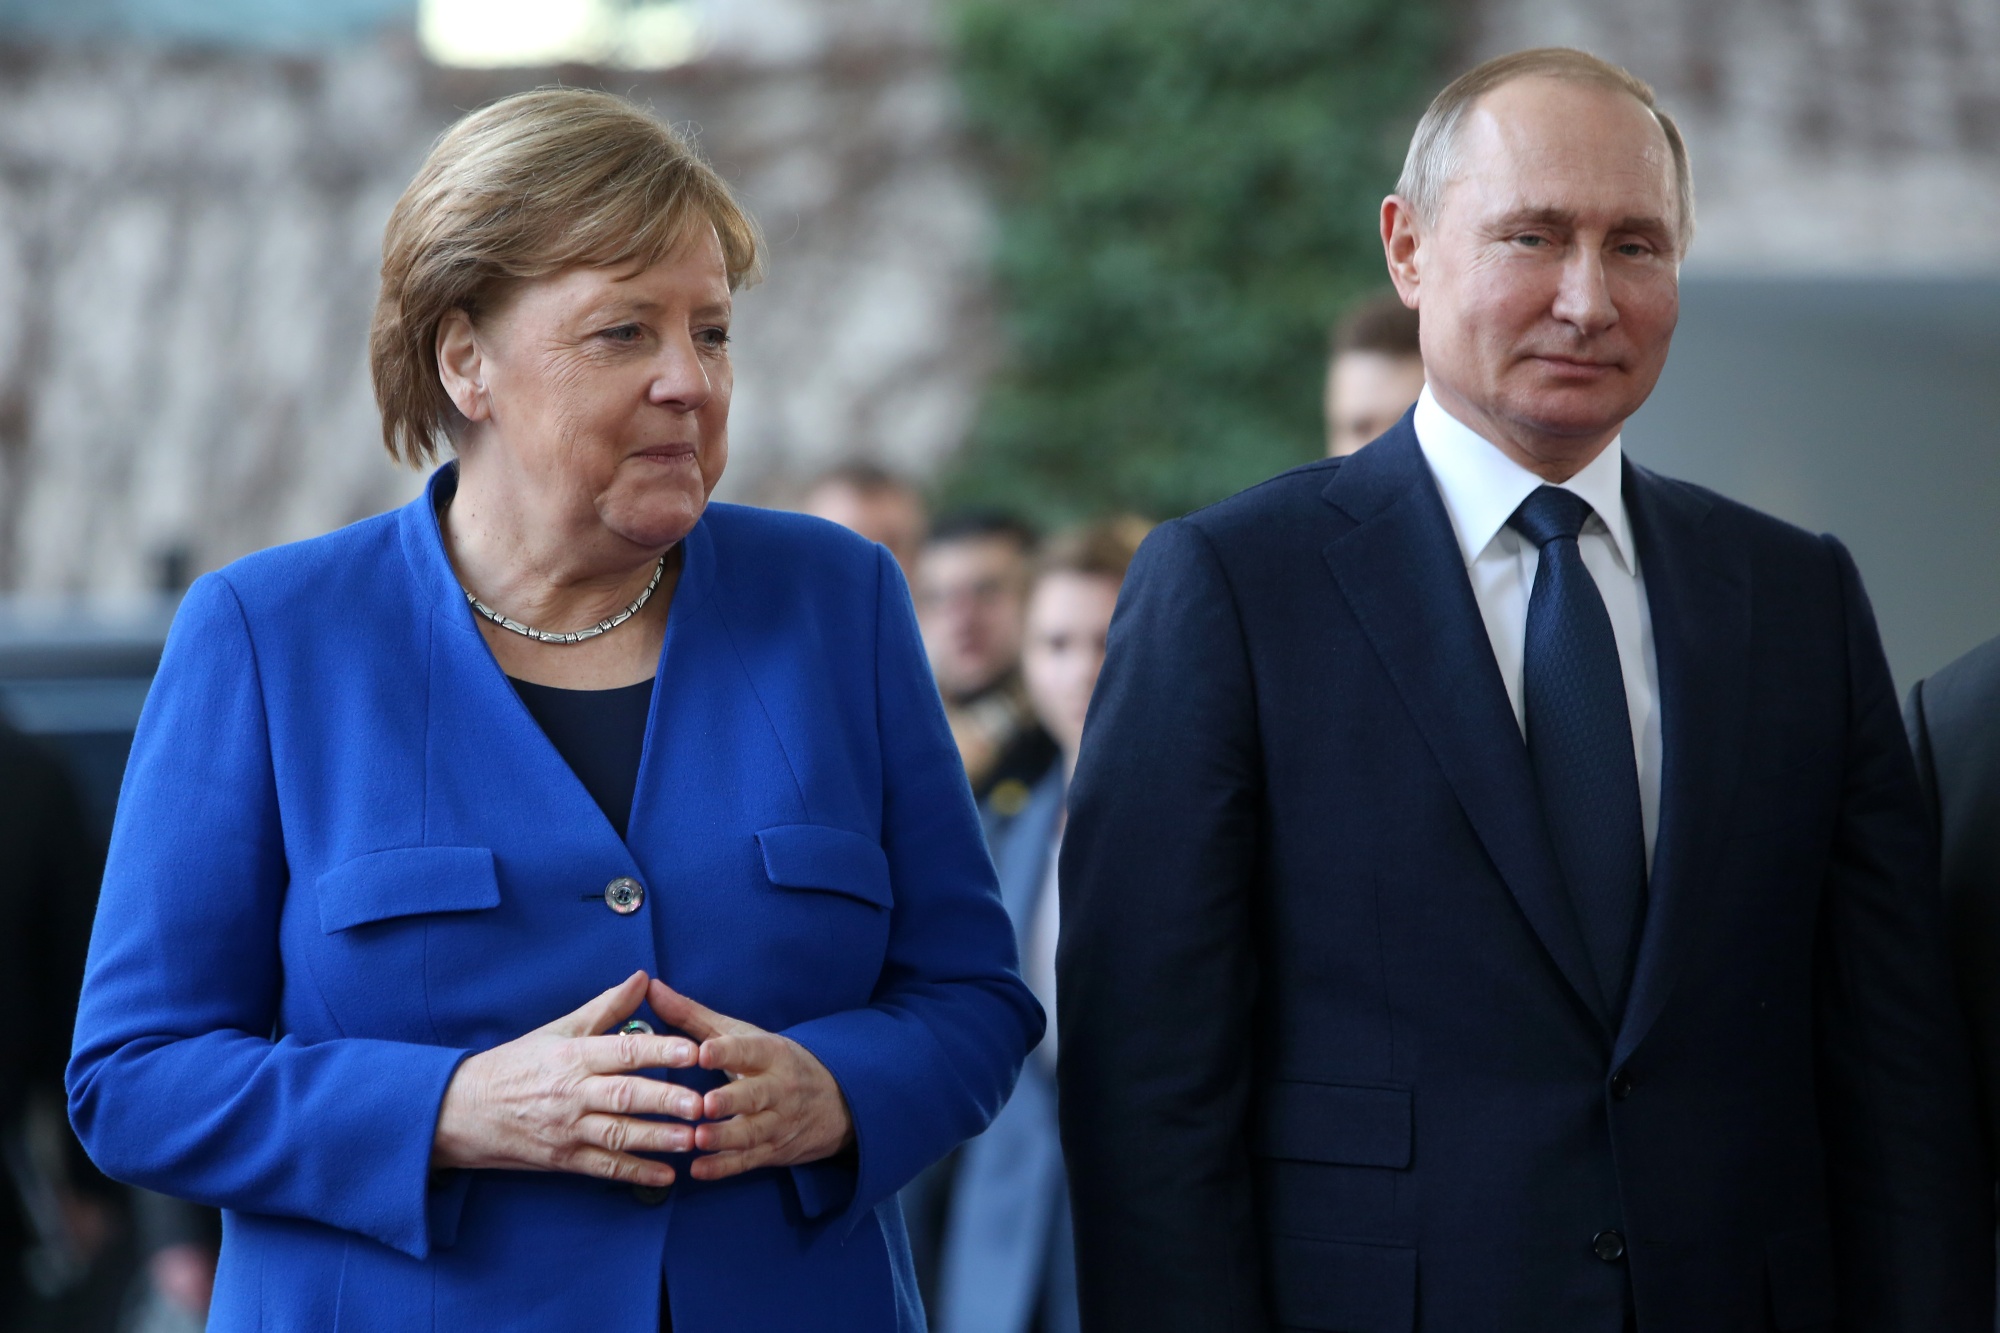 German Chancellor Angela Merkel greets Russian President Vladimir Putin as he arrives for an international summit on securing peace in Libya on Jan. 19, 2020 in Berlin.